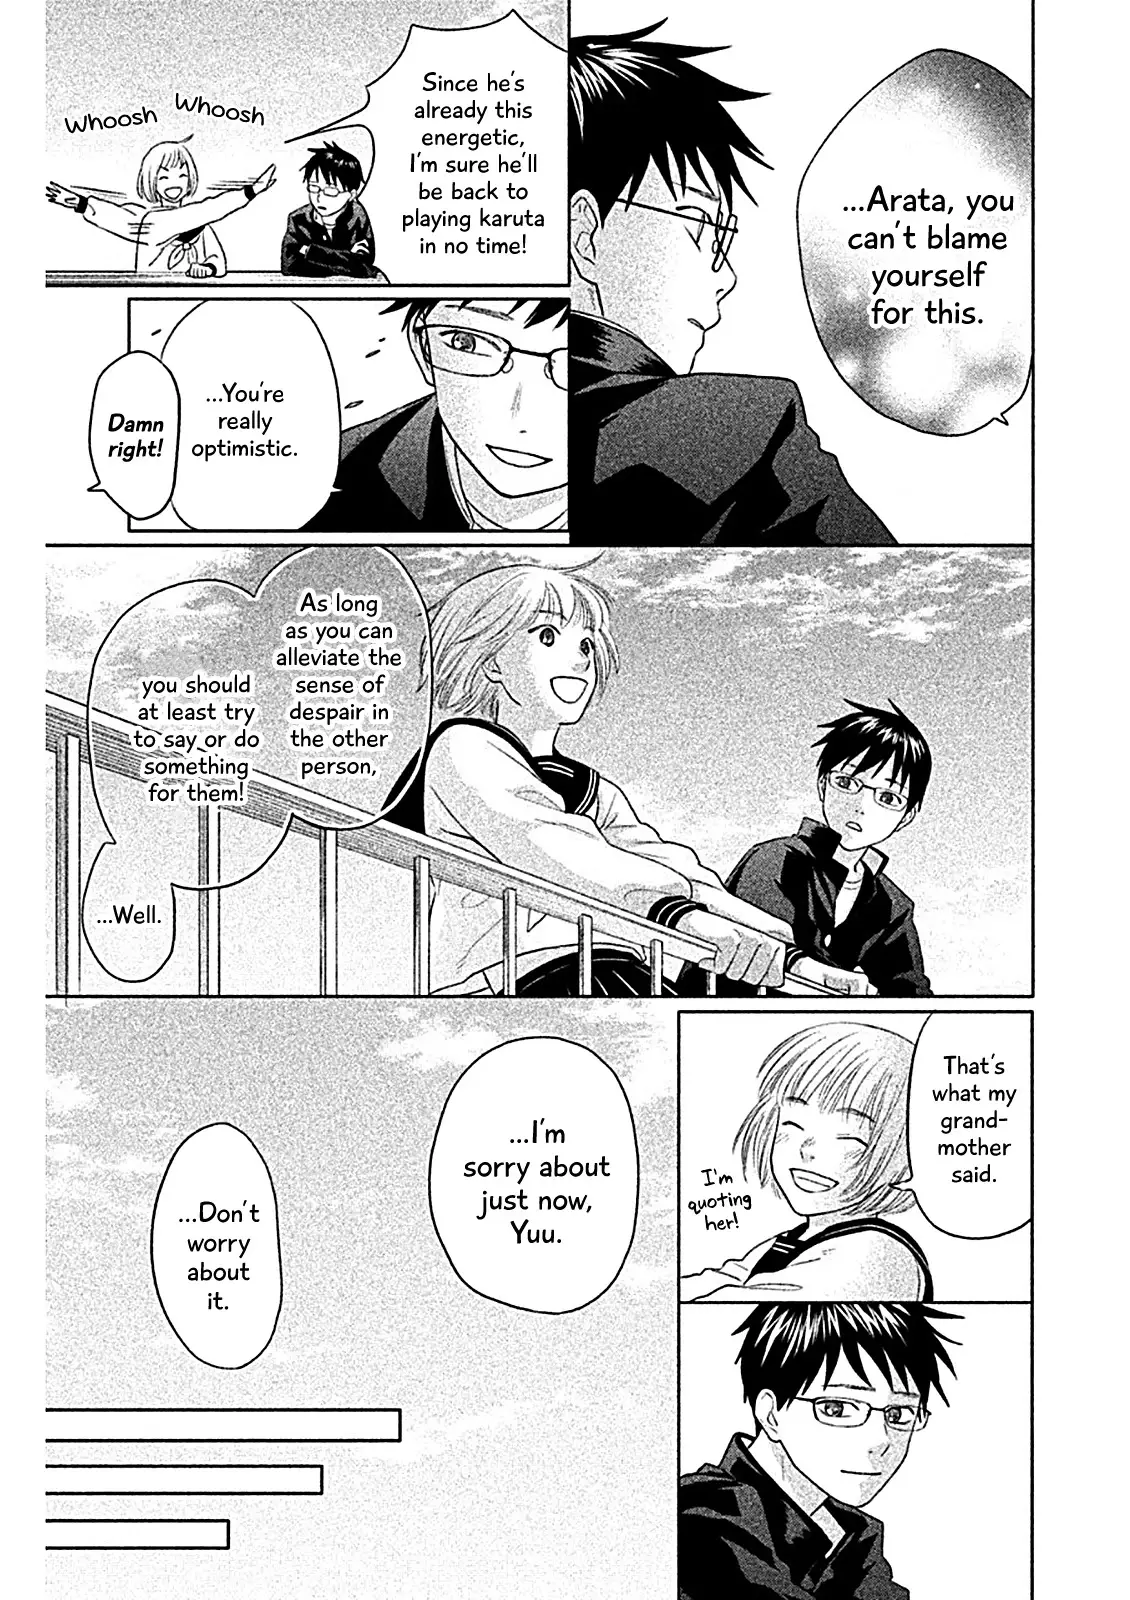 Chihayafuru: Middle School Arc - 8 page 9